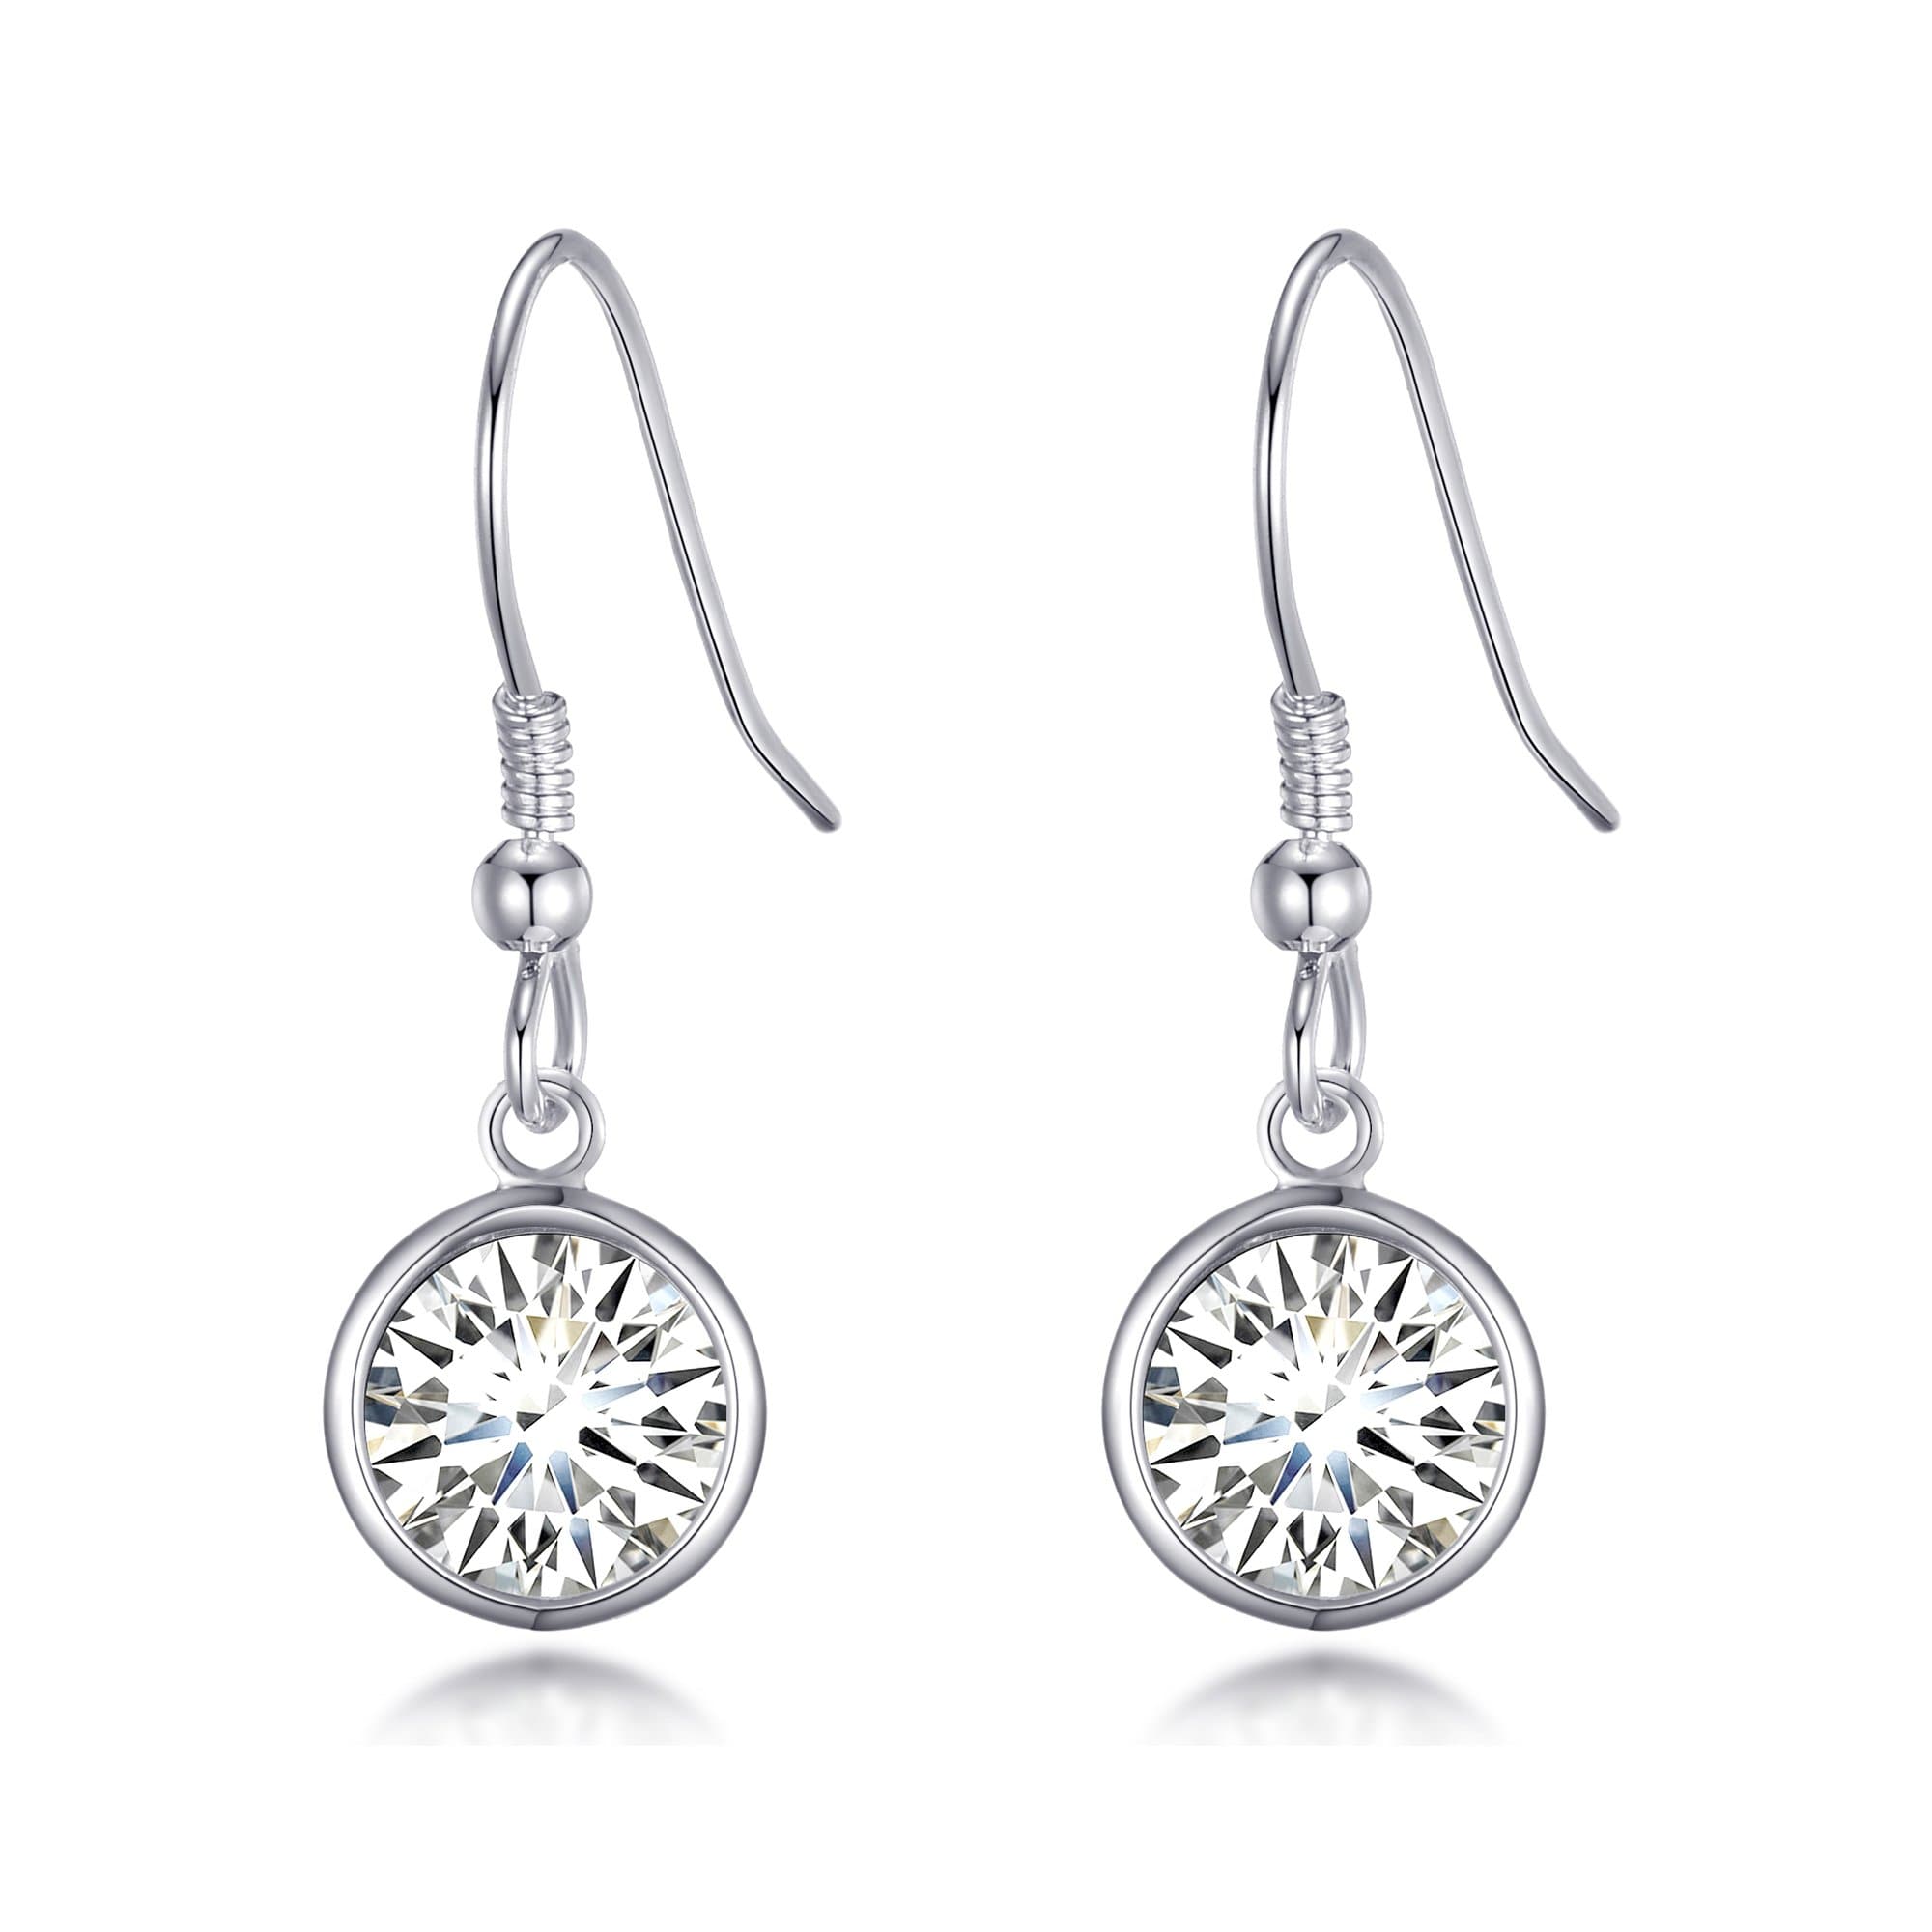 Crystal Drop Earrings Created with Zircondia® Crystals by Philip Jones Jewellery